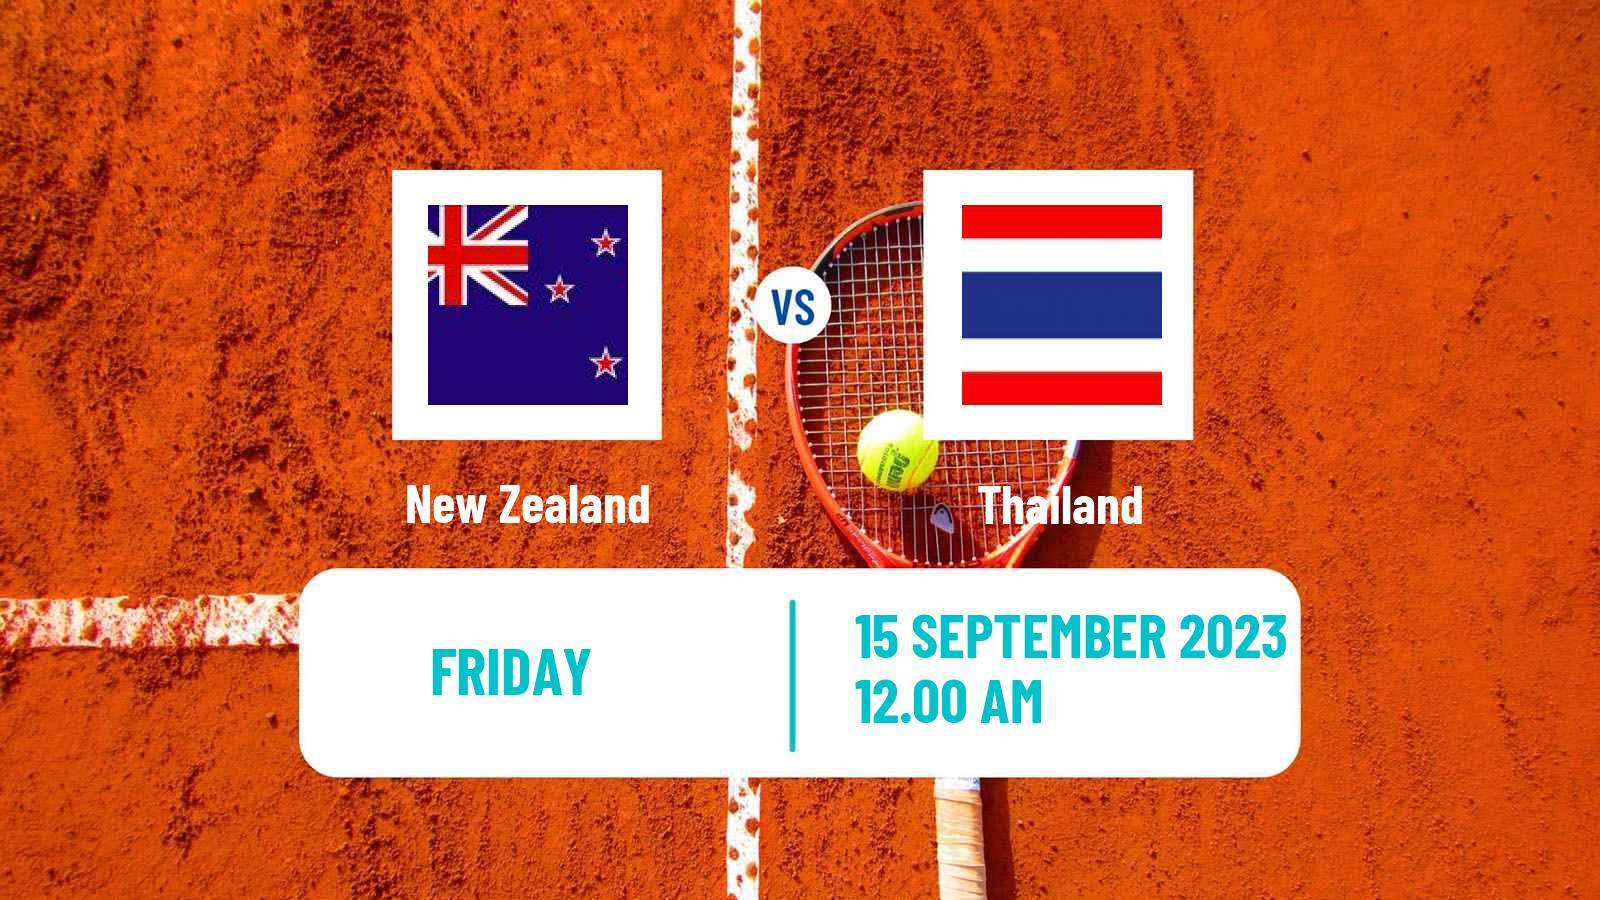 Tennis Davis Cup World Group II Teams New Zealand - Thailand